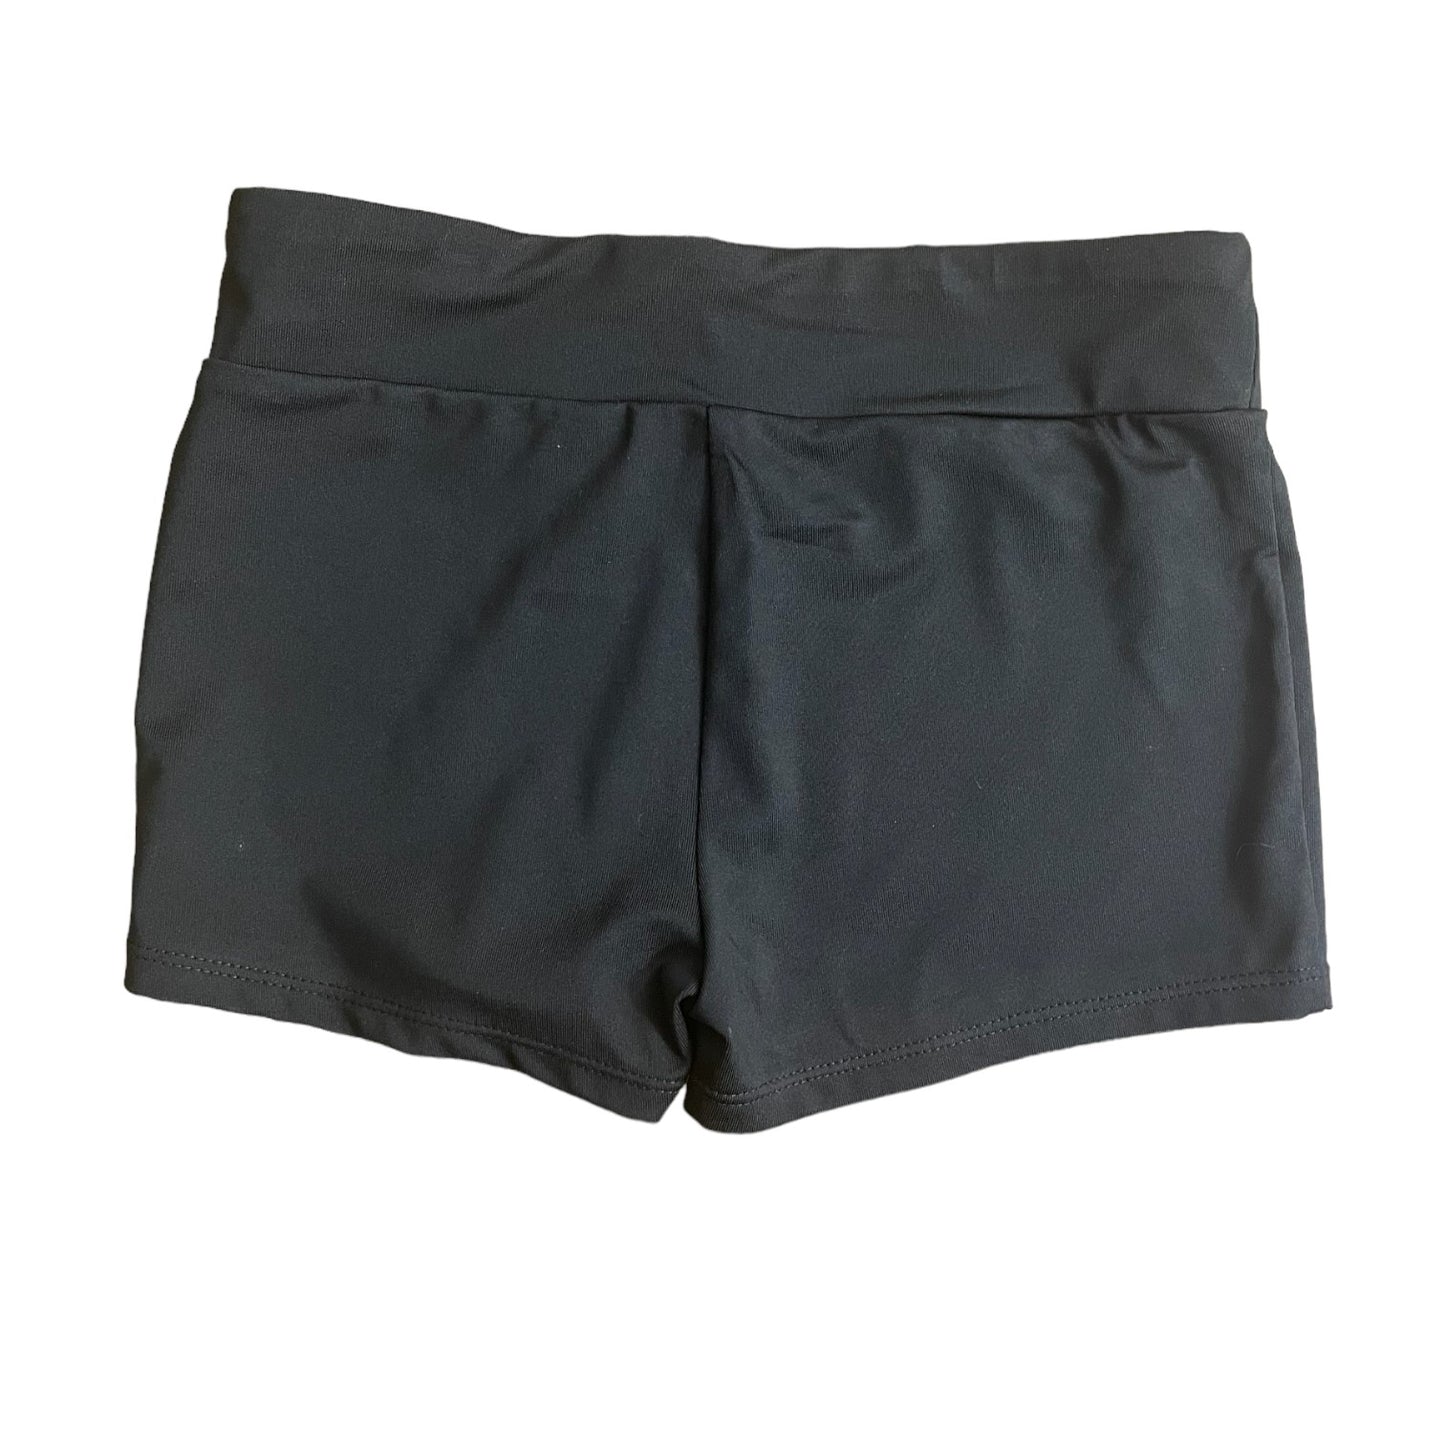 Danskin Freestyle Shorts Size 10/12